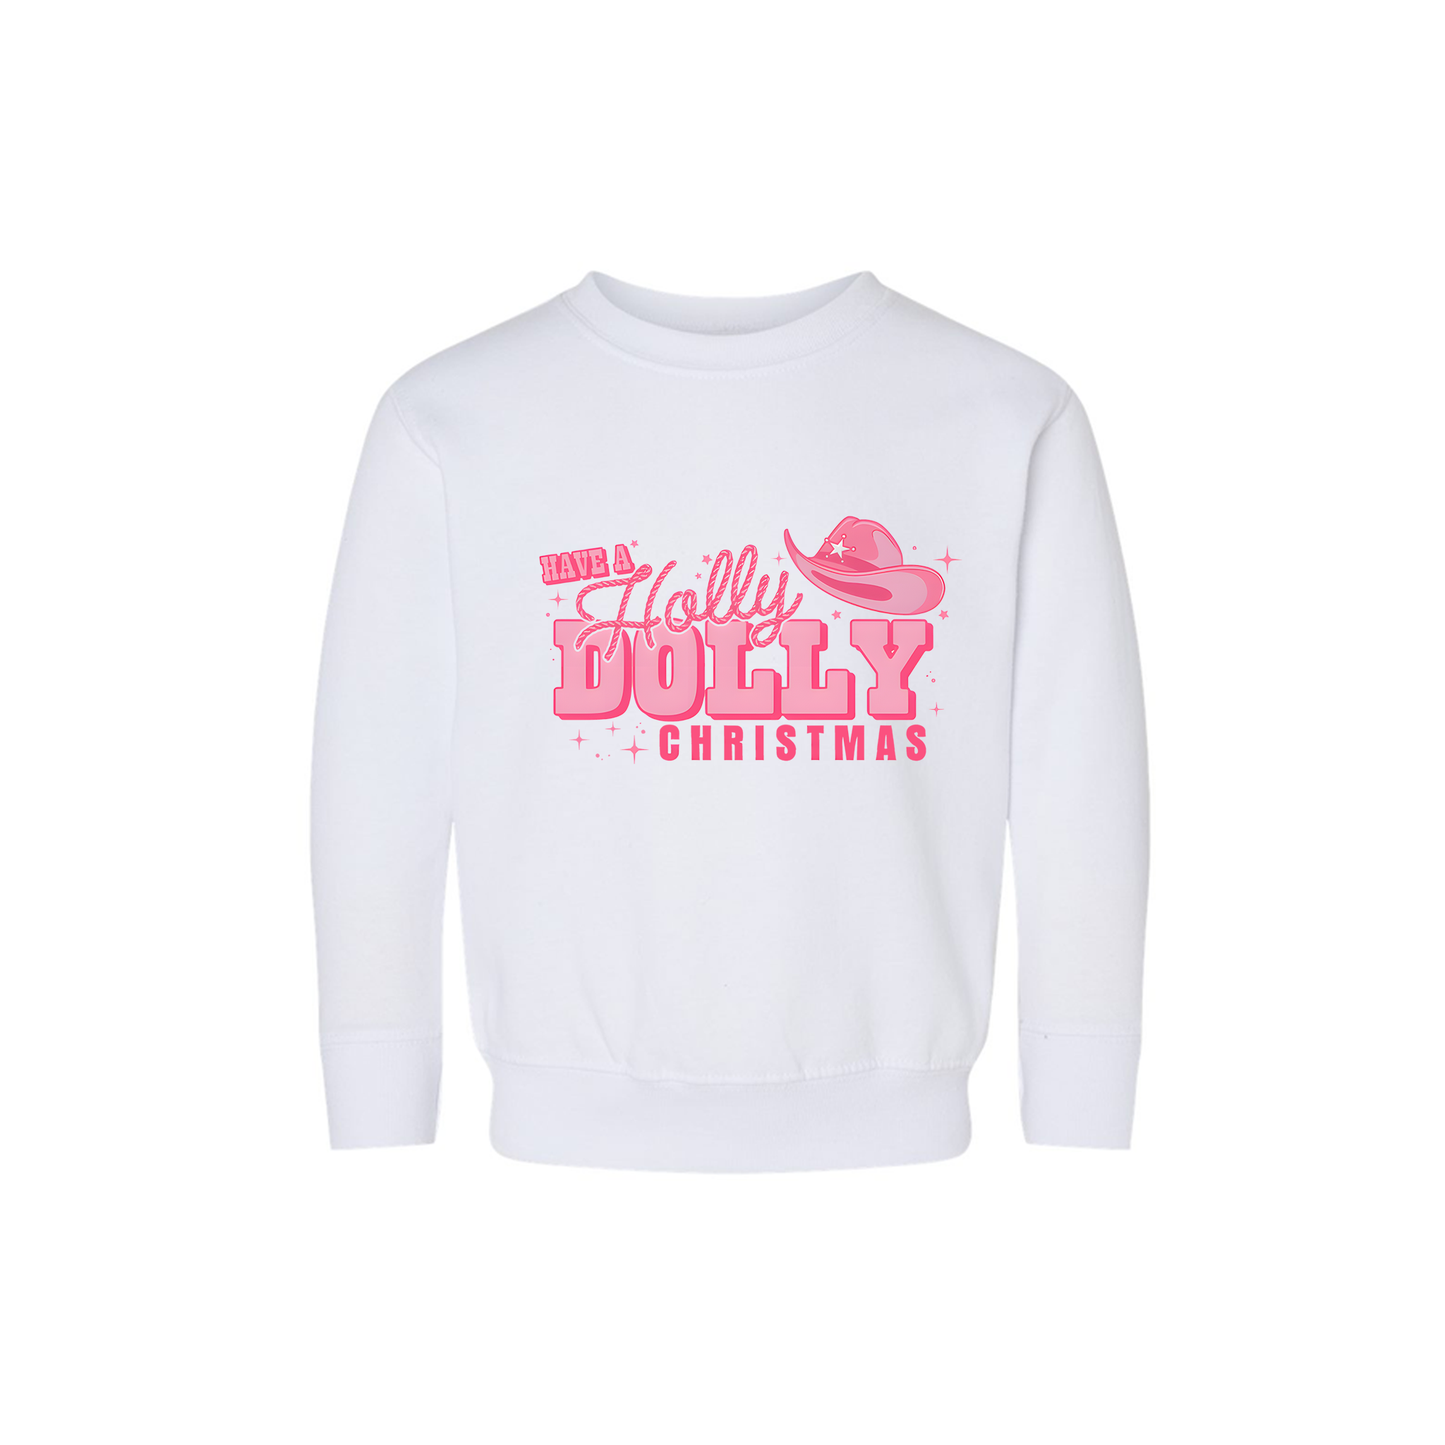 Holly Dolly Christmas - Kids Sweatshirt (White)